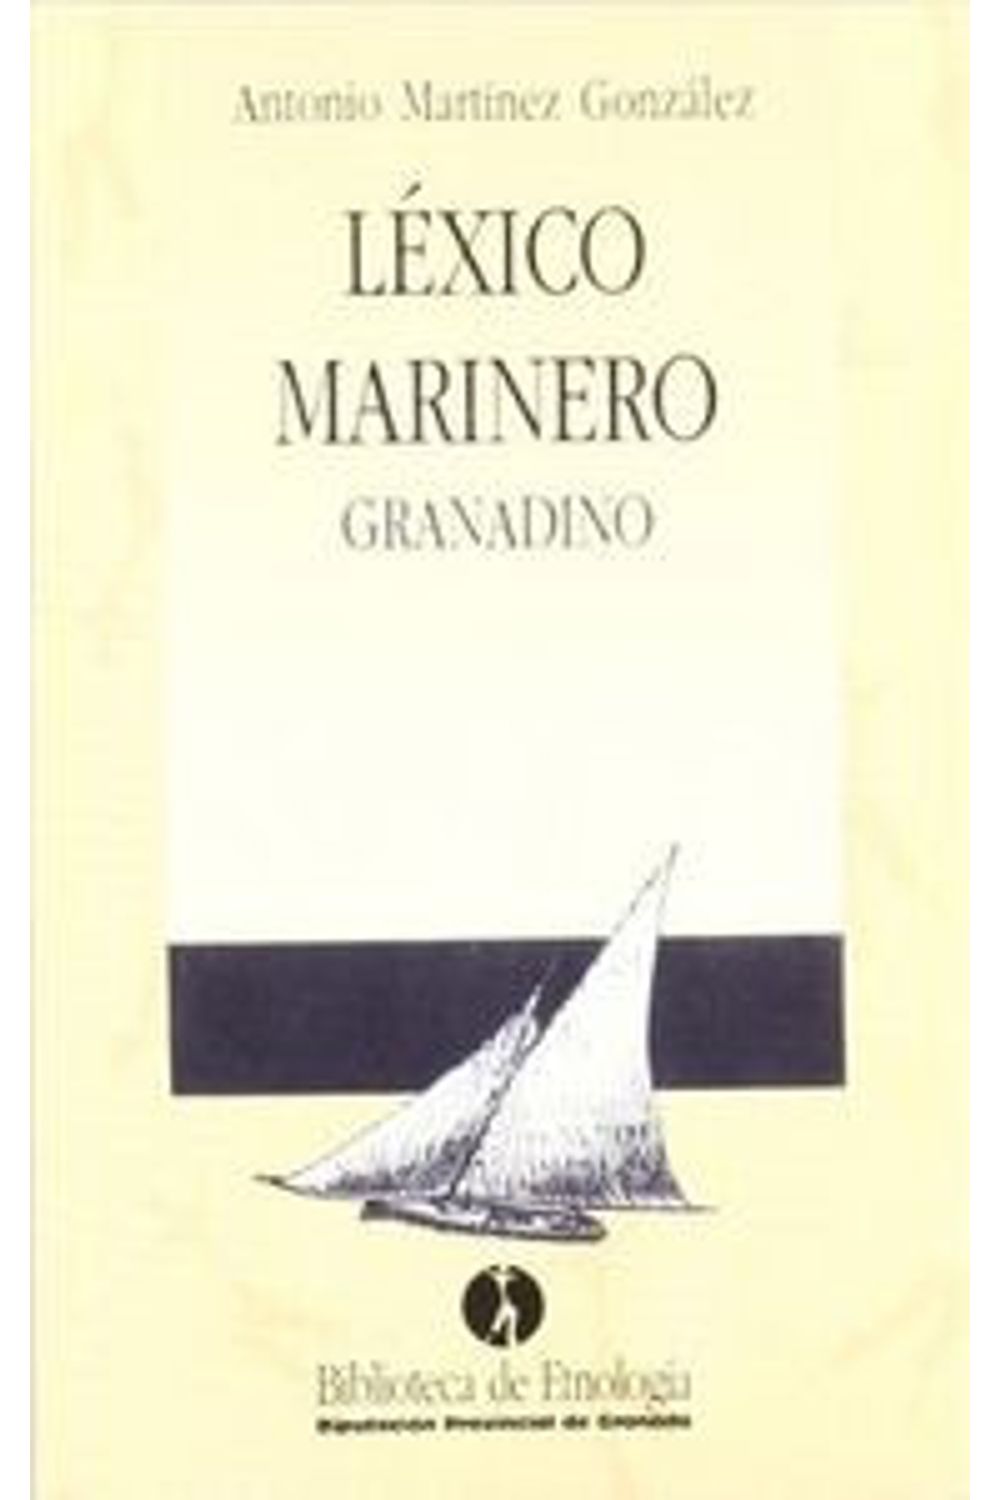 Lexico Marinero Granadino